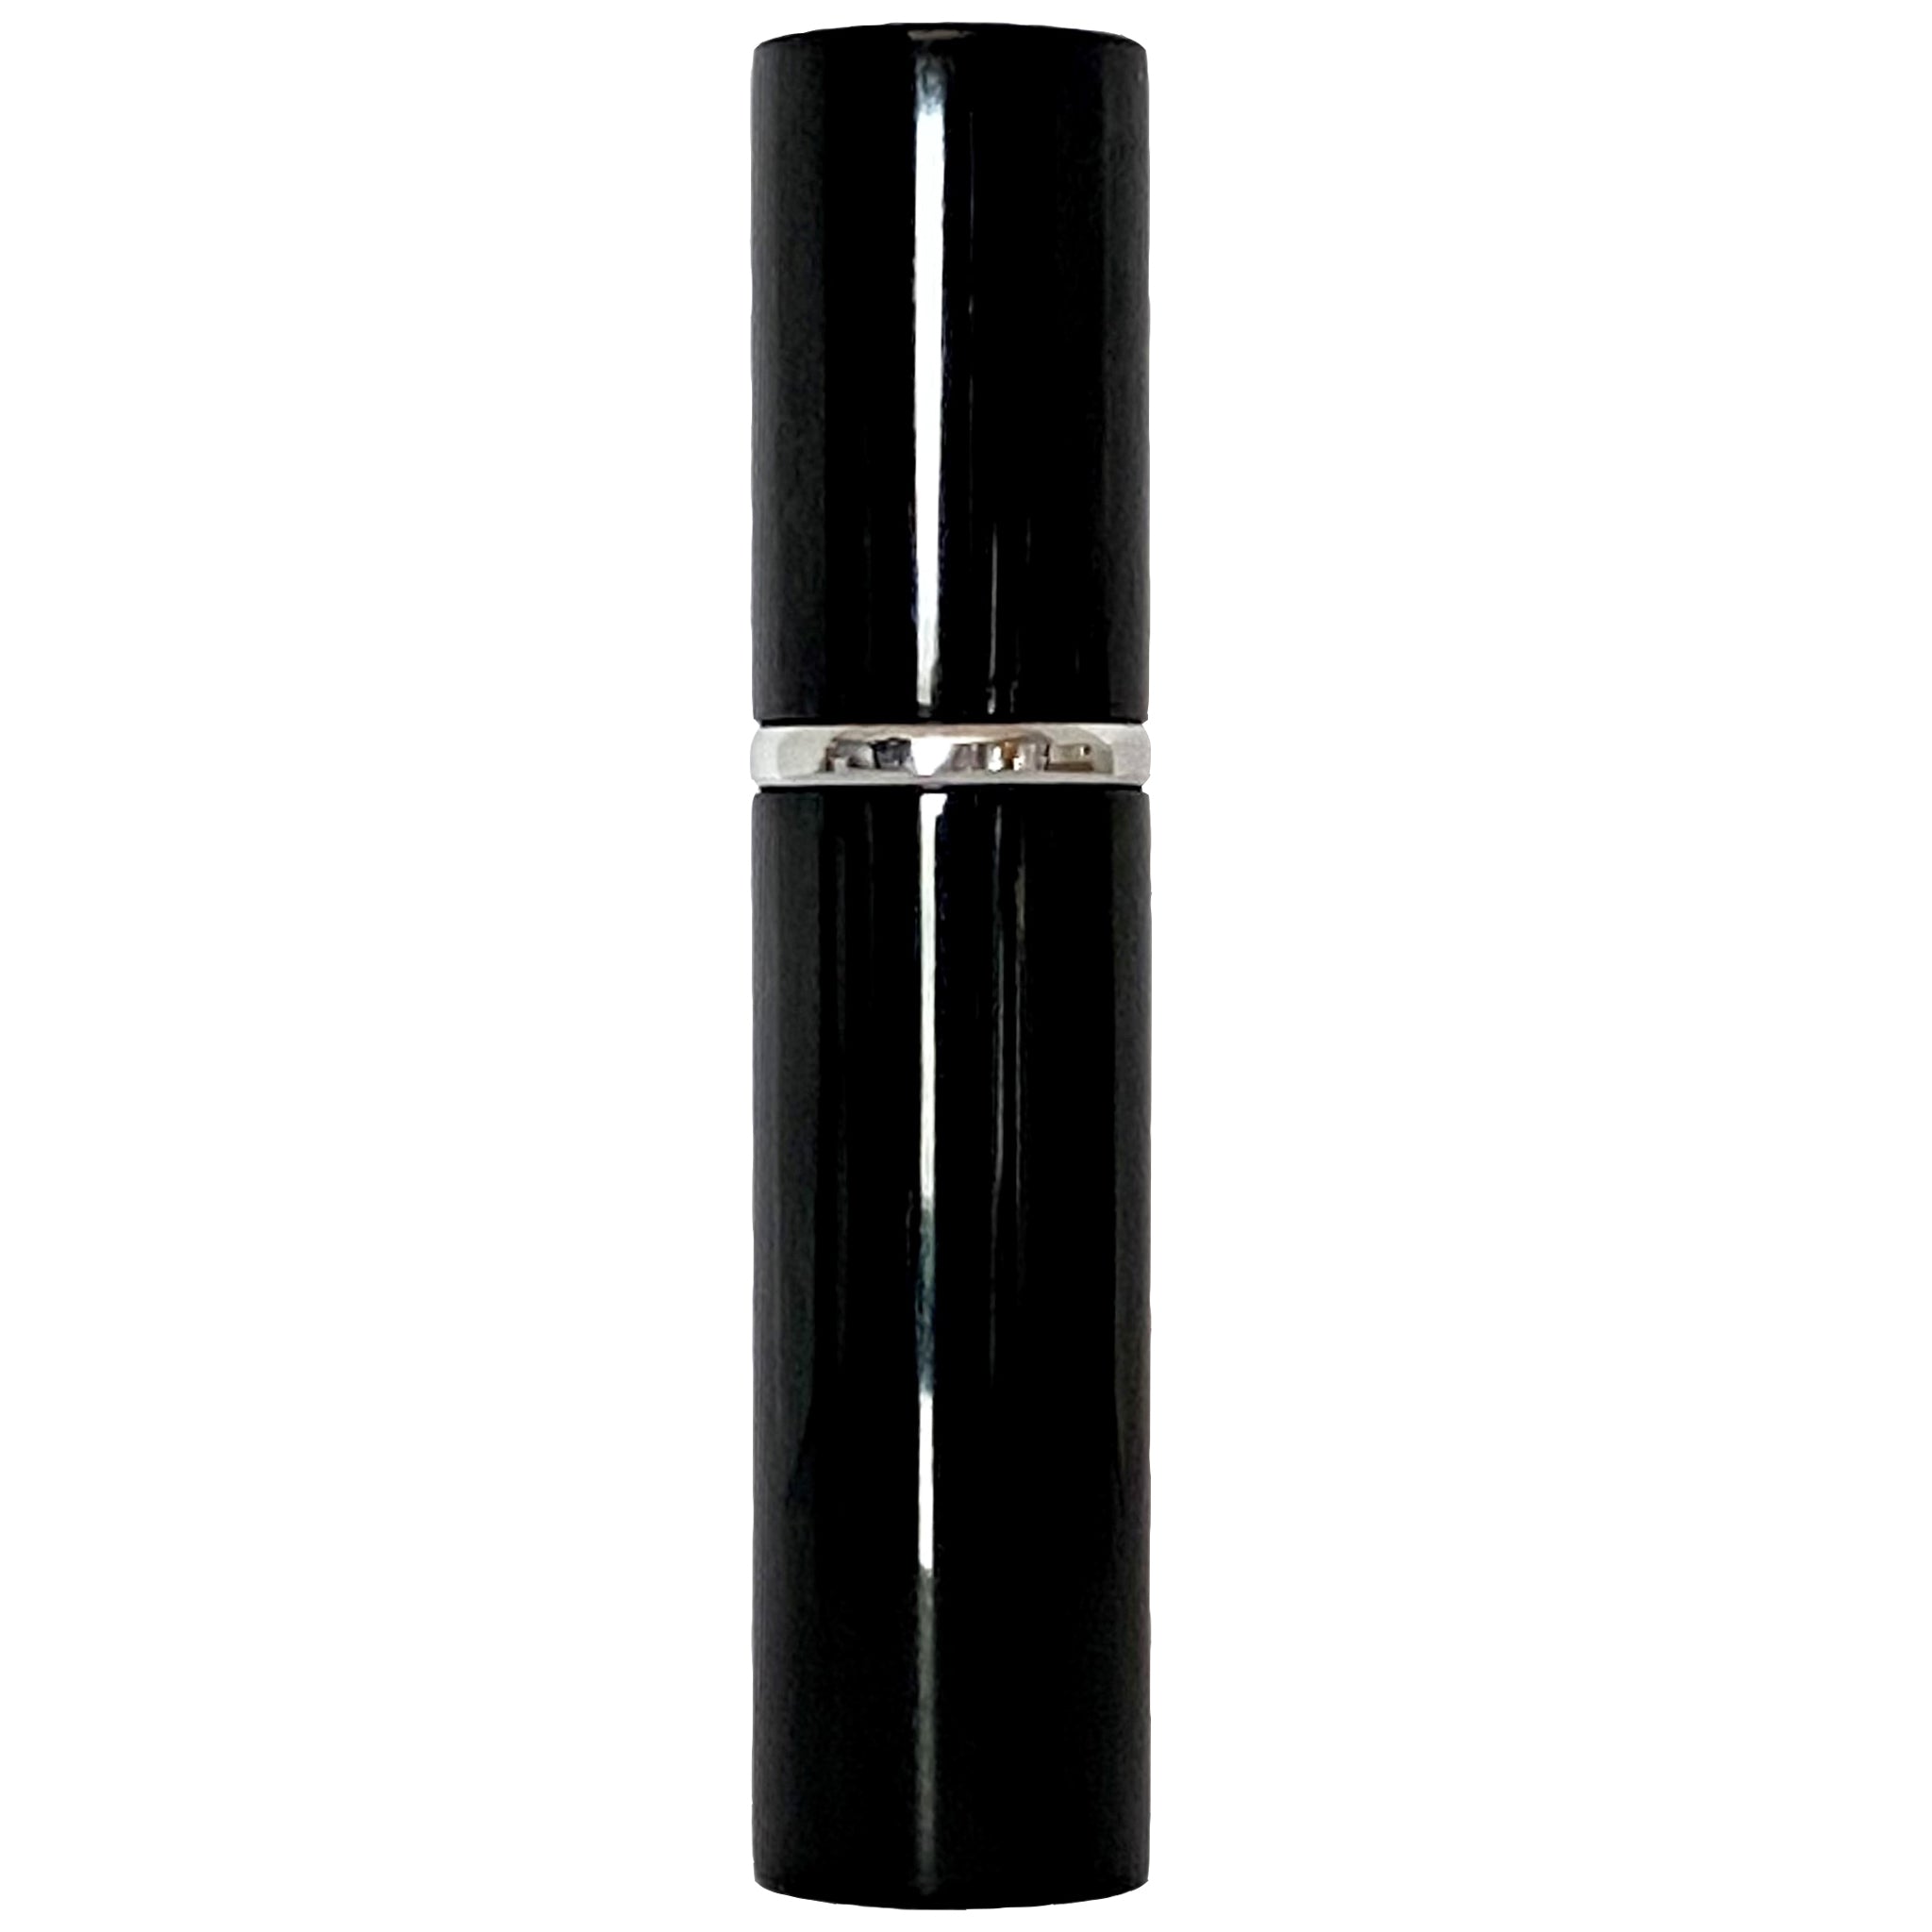 6ml 0.2oz Black Perfume Glass Spray Deluxe Bottles Silver Atomizers